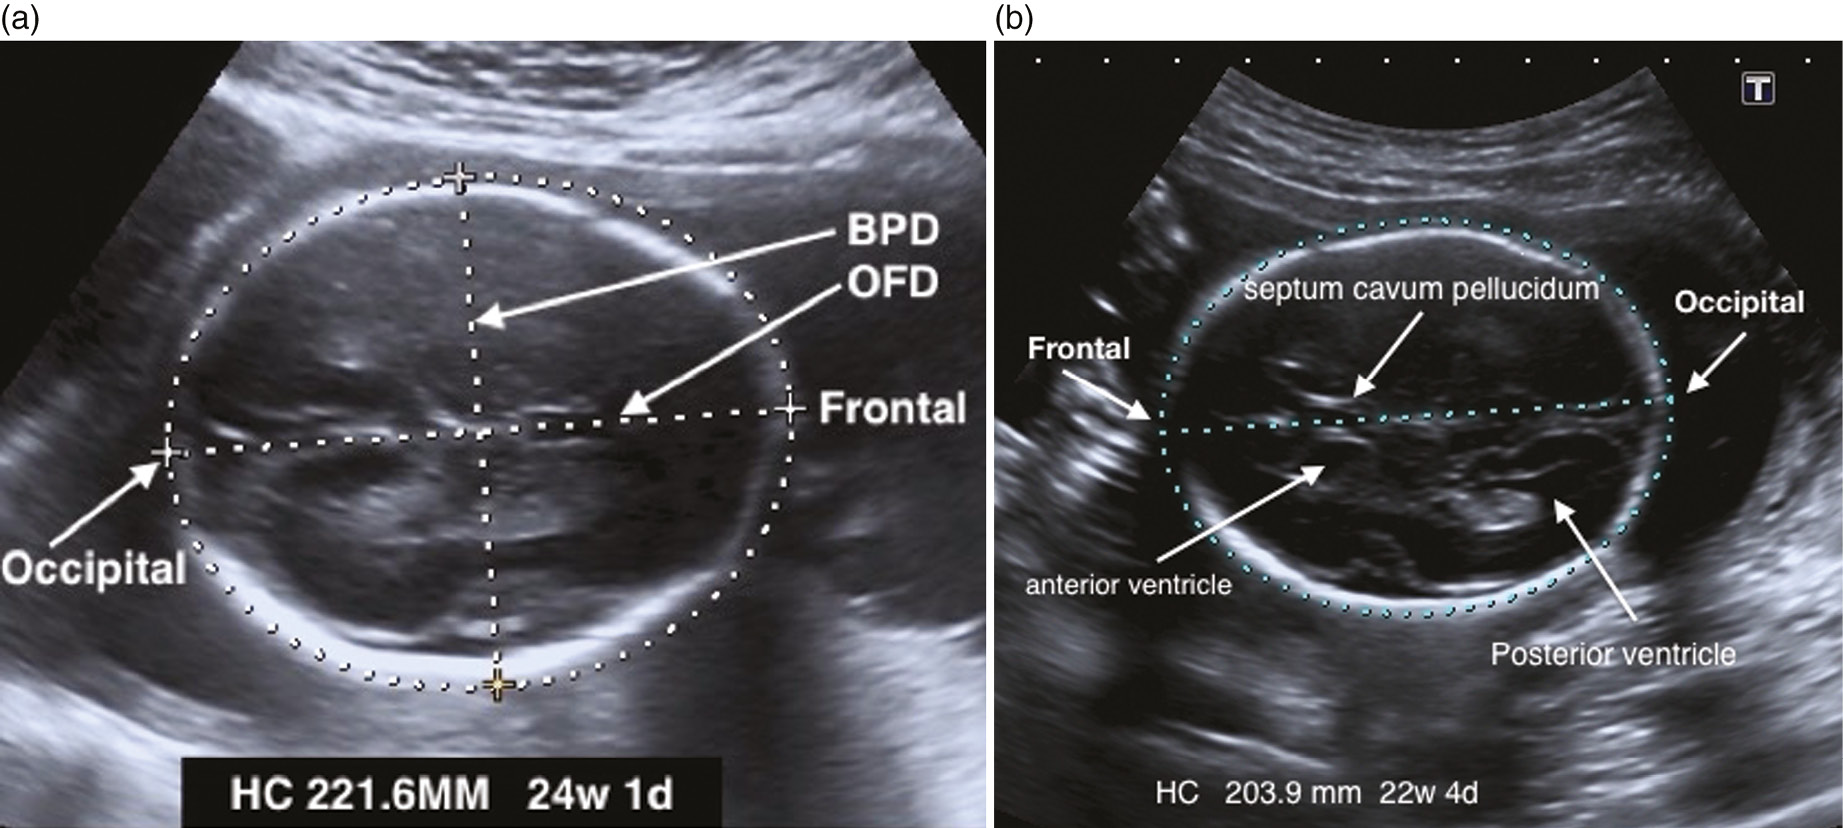 Dating criteria ultrasound First trimester